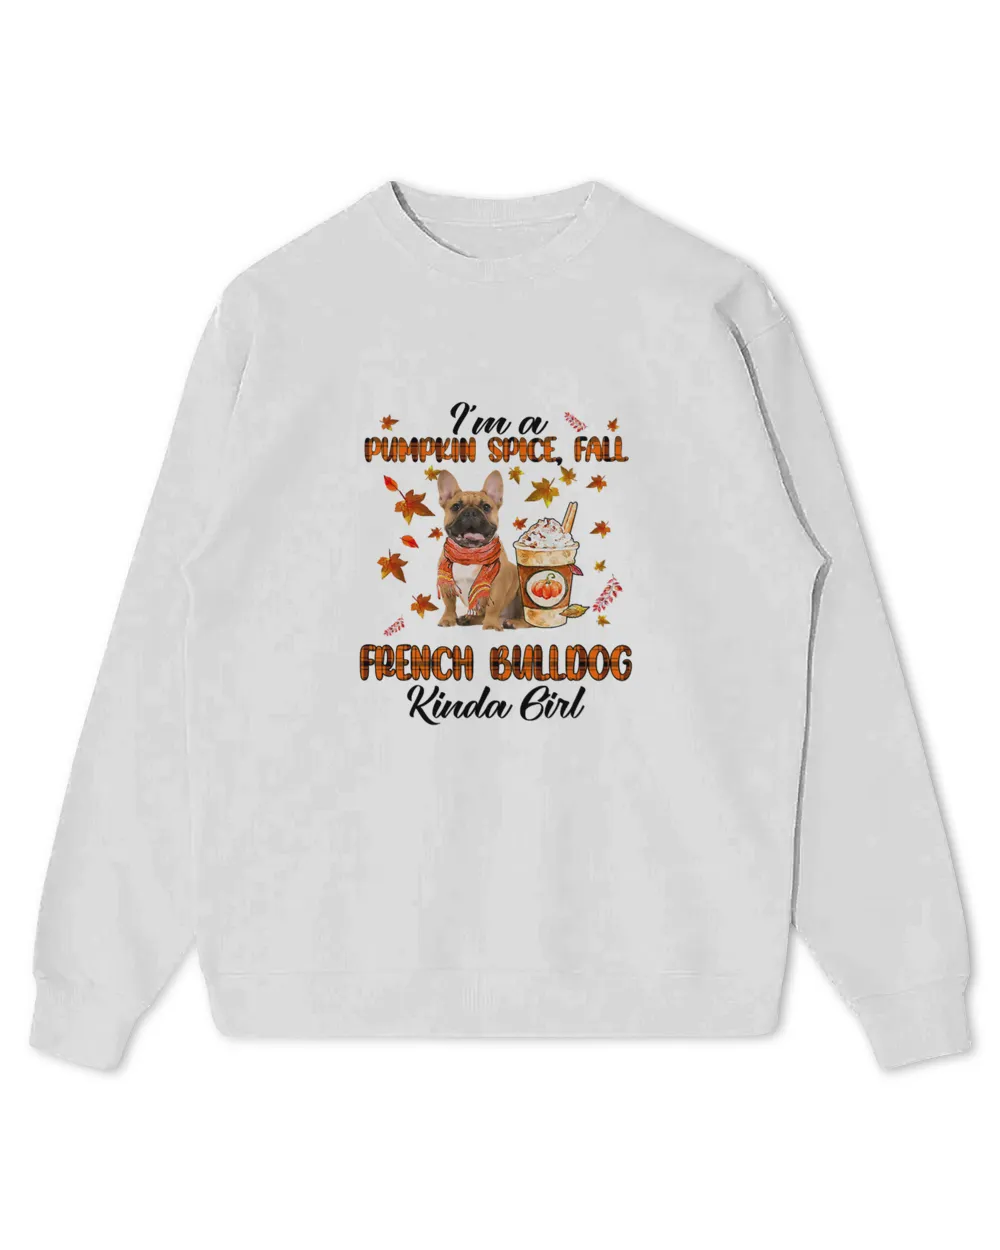 French Bulldog Im A Pumpkin Spice Fall And French Bulldog Kinda Girl Fall 77 Frenchie Dog